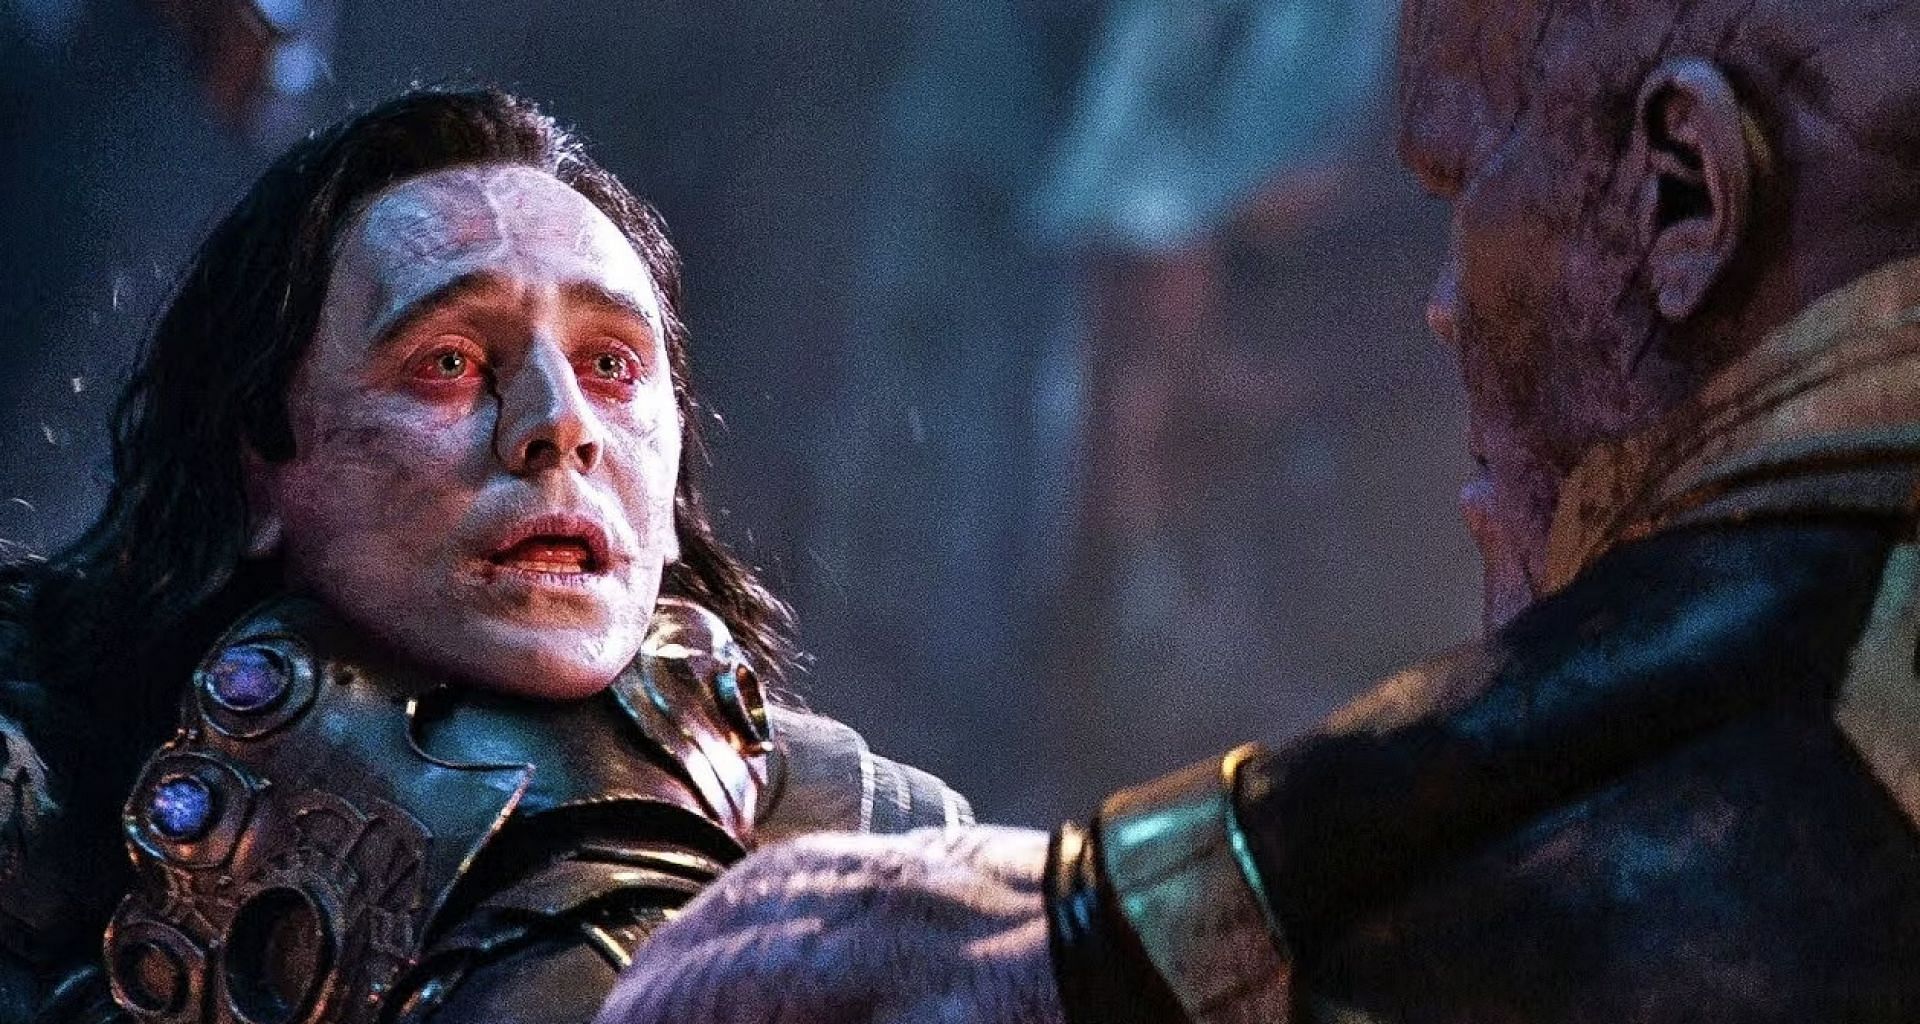 Thanos kills Loki in the opening scene, establishing him as a formidable villain (Image via Marvel Studios)